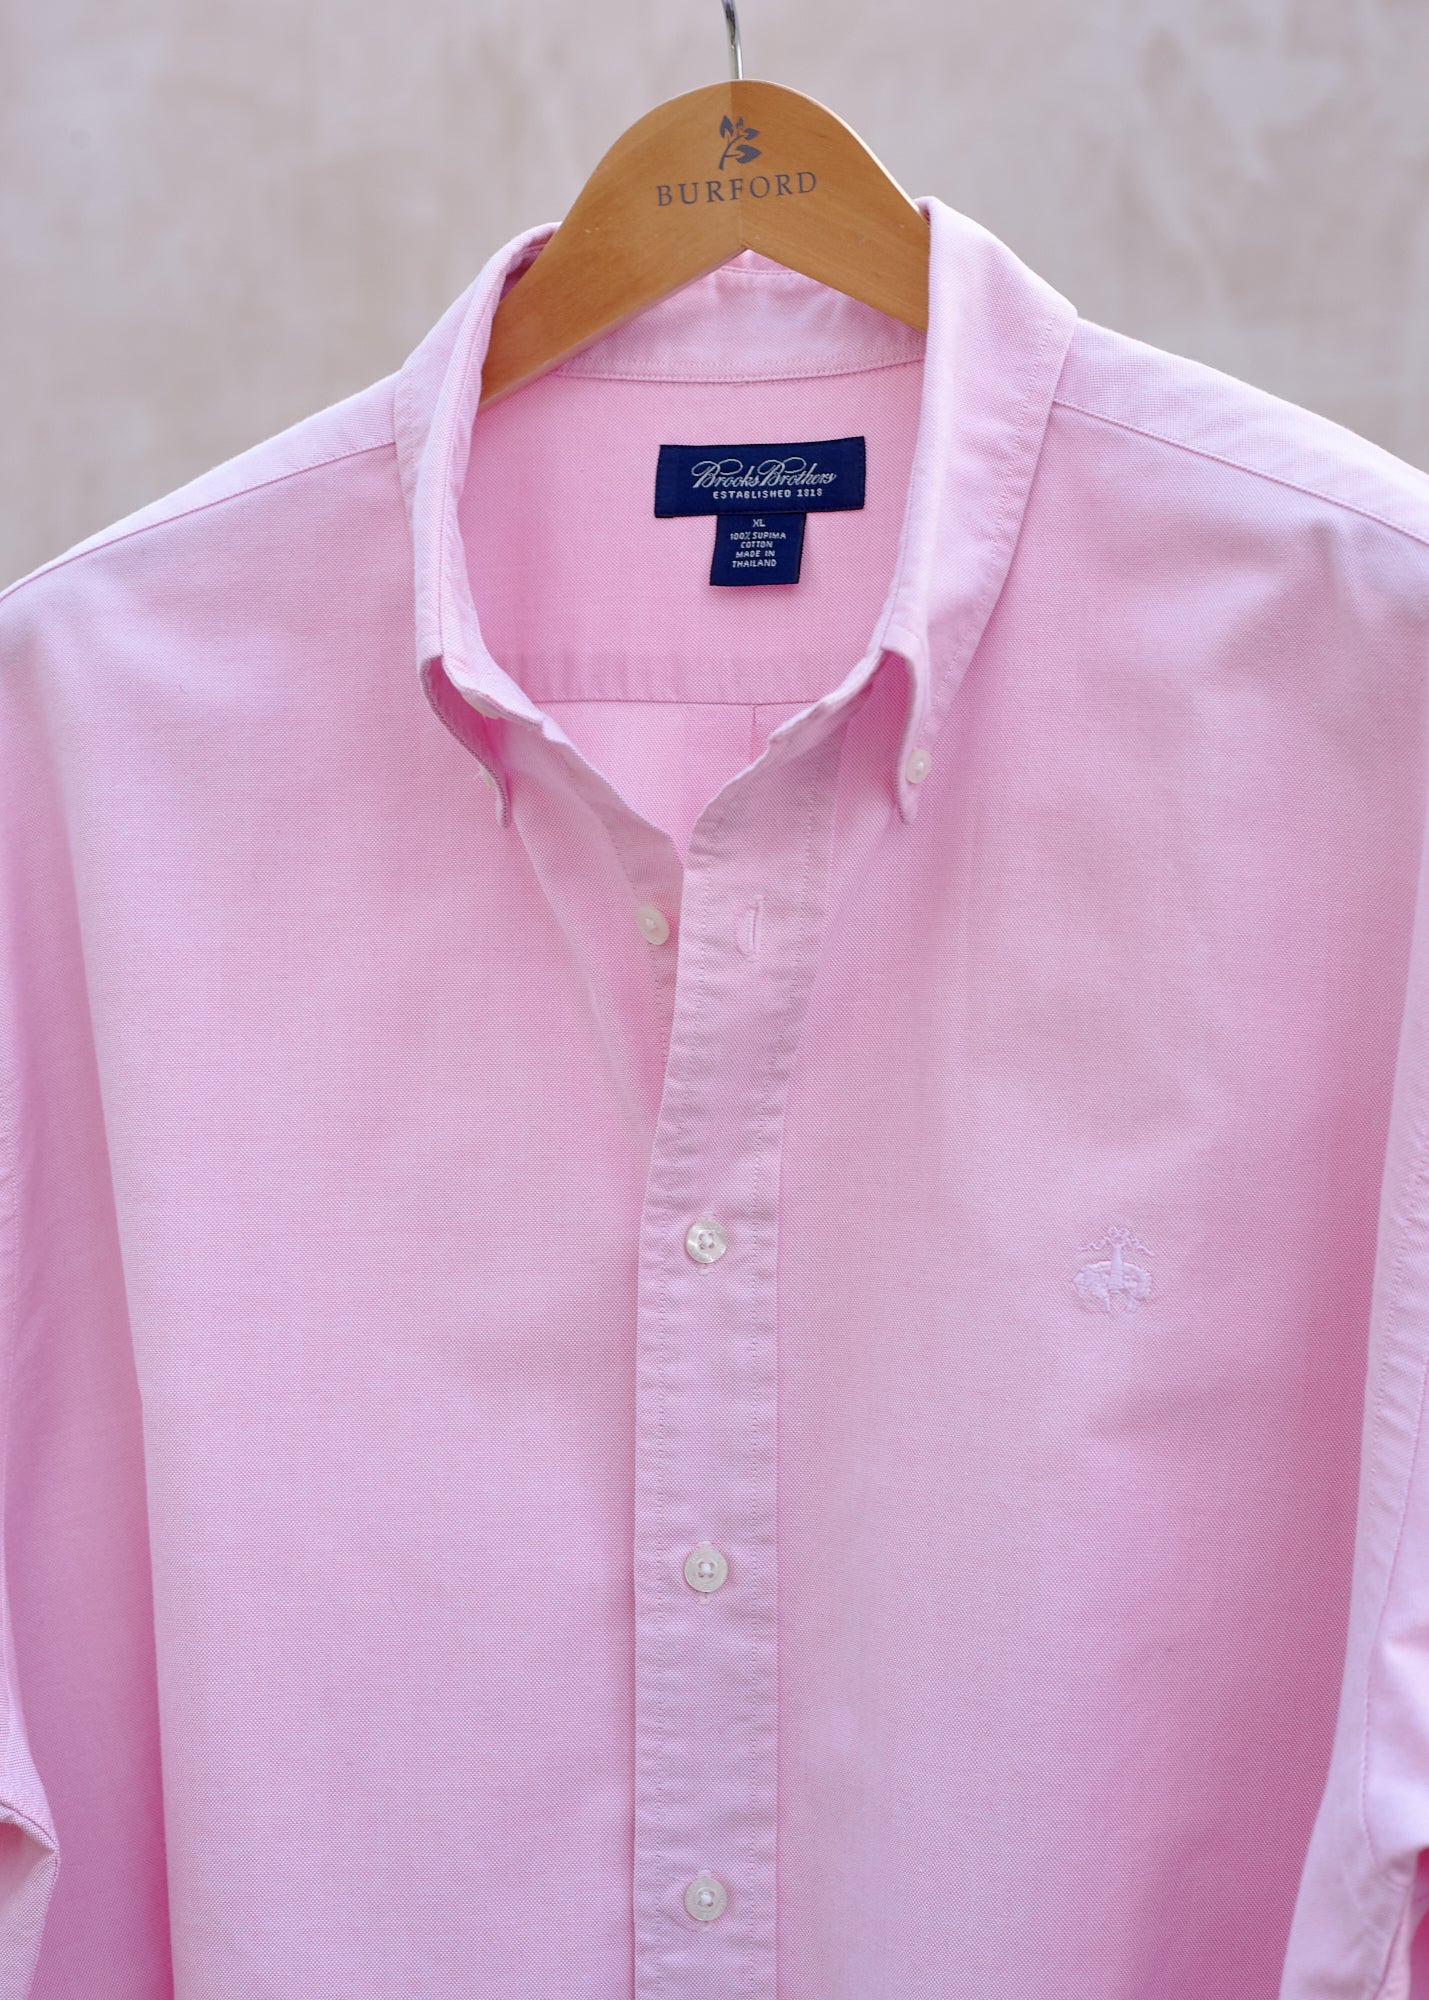 Brooks Brothers Pink Oxford Supima Cotton Buttondown Shirt - XL